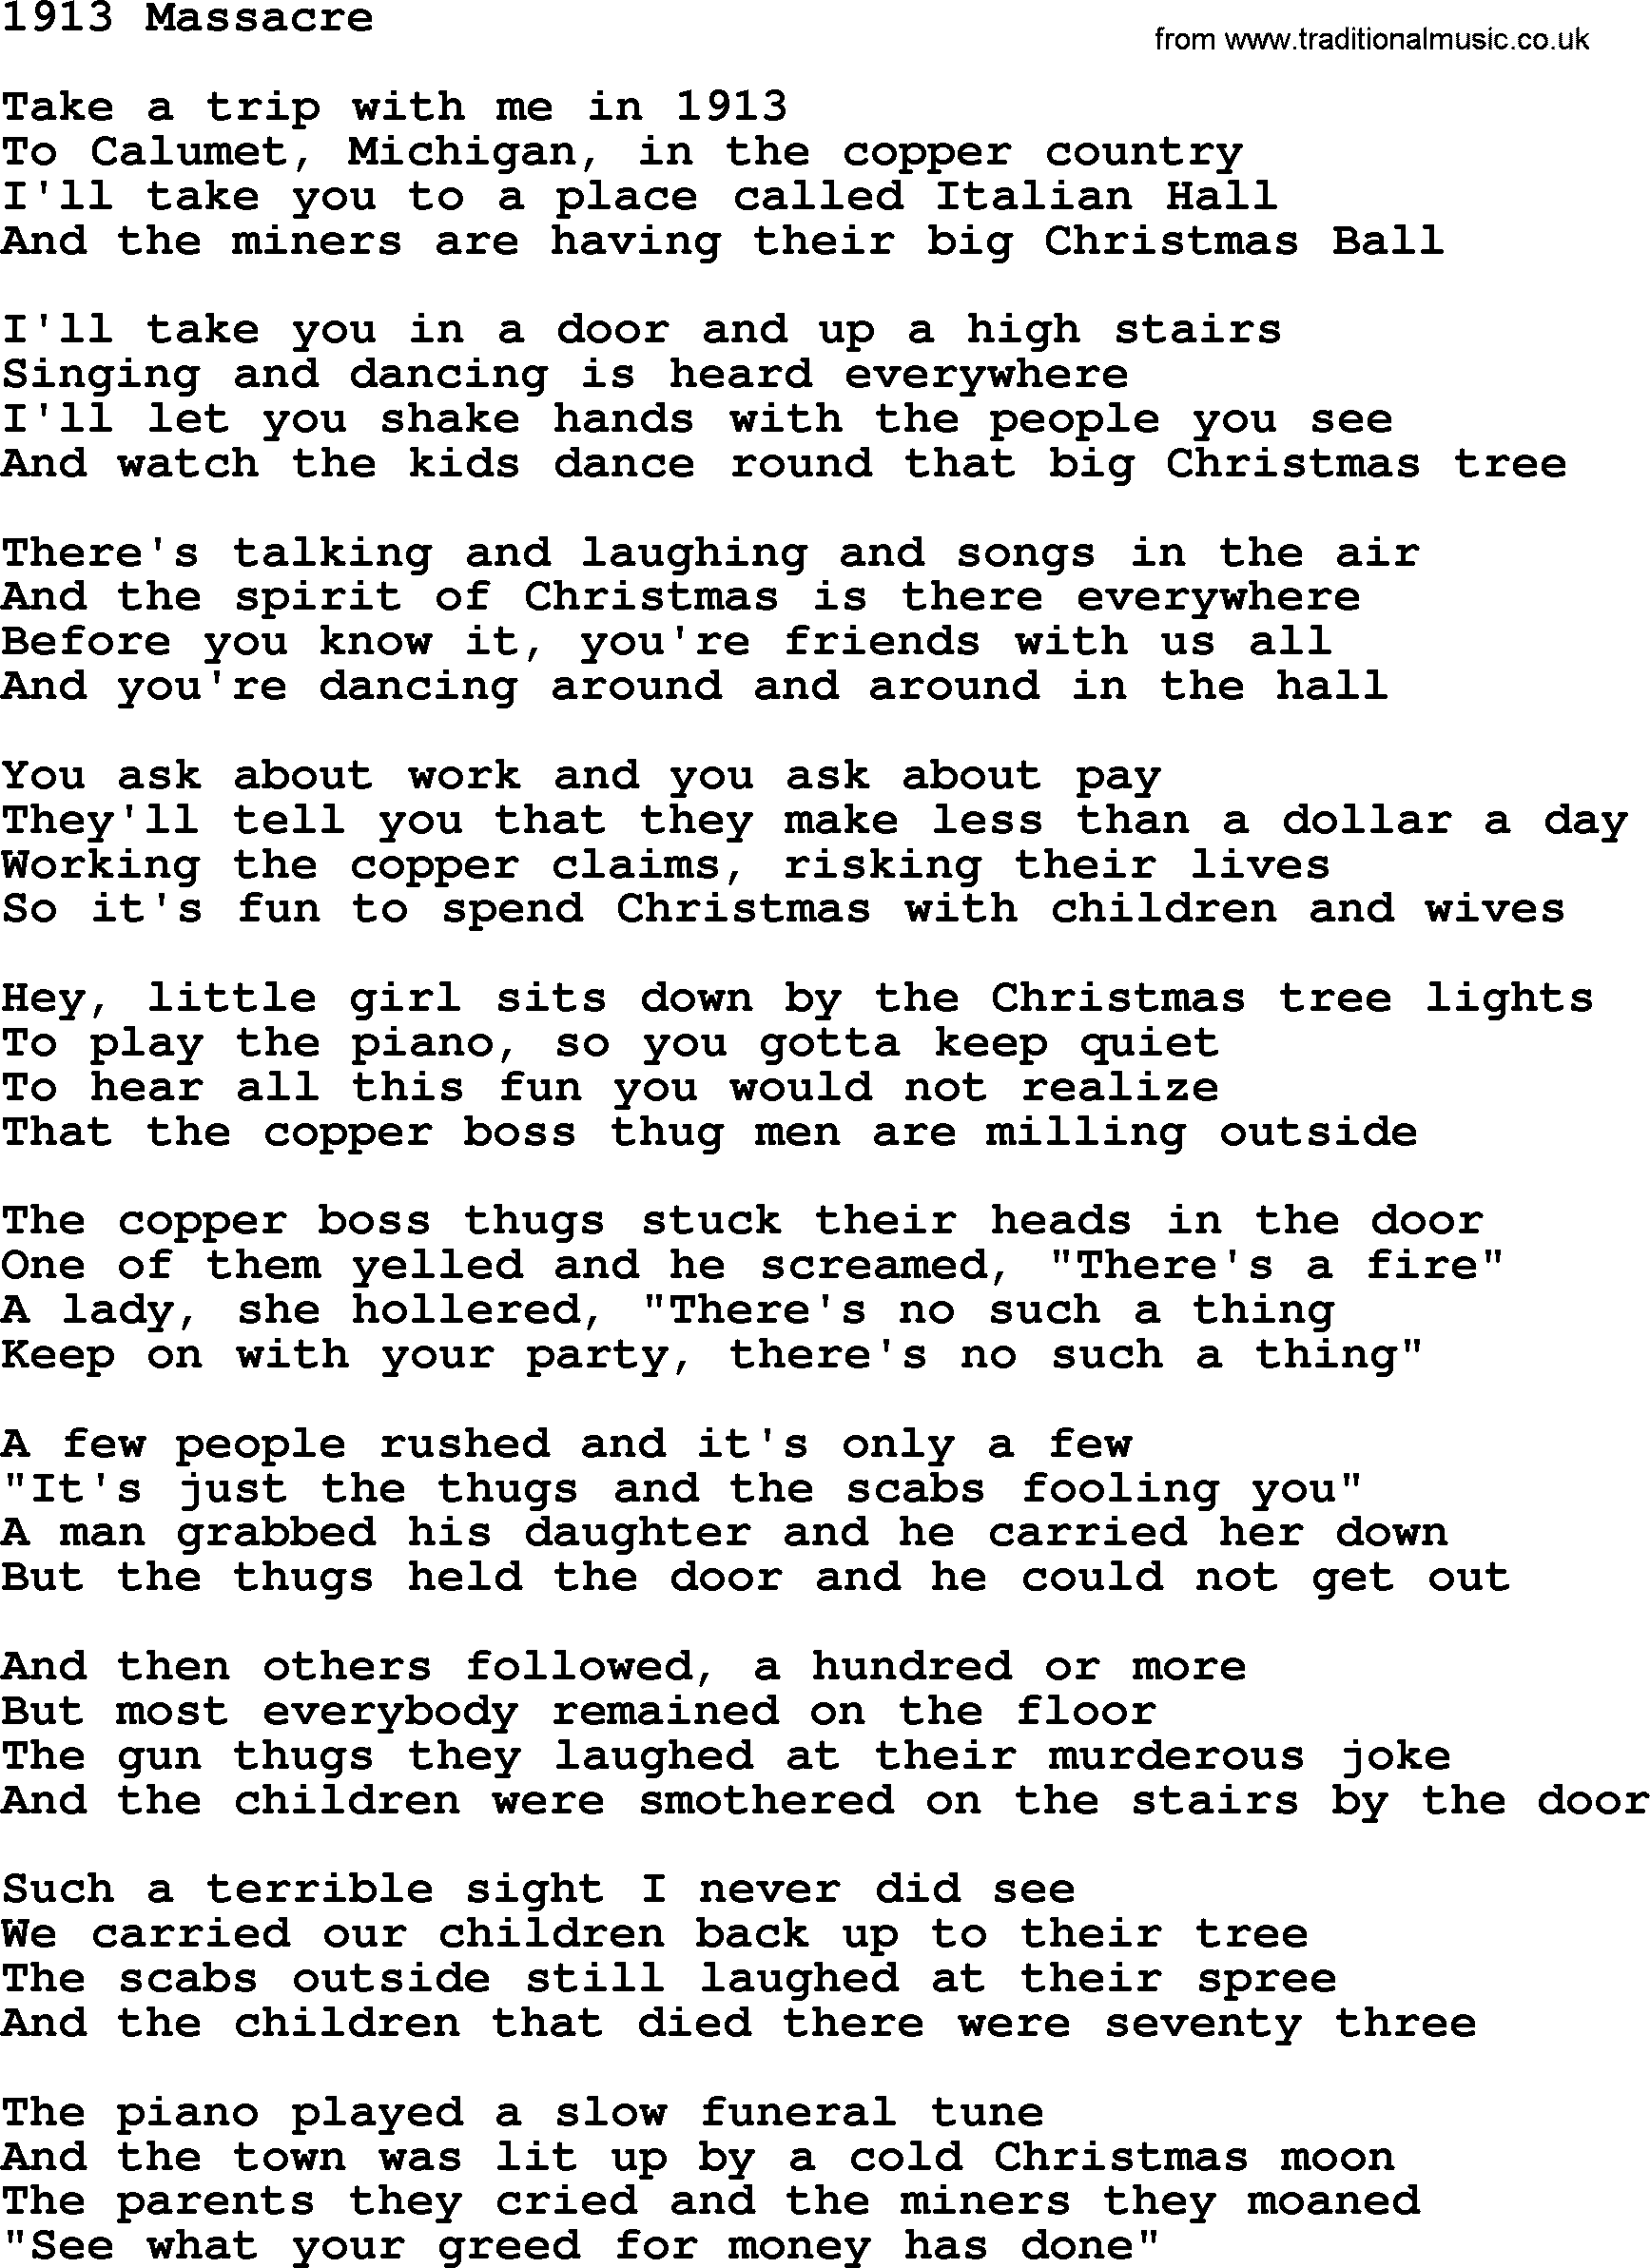 Woody Guthrie song 1913 Massacre lyrics